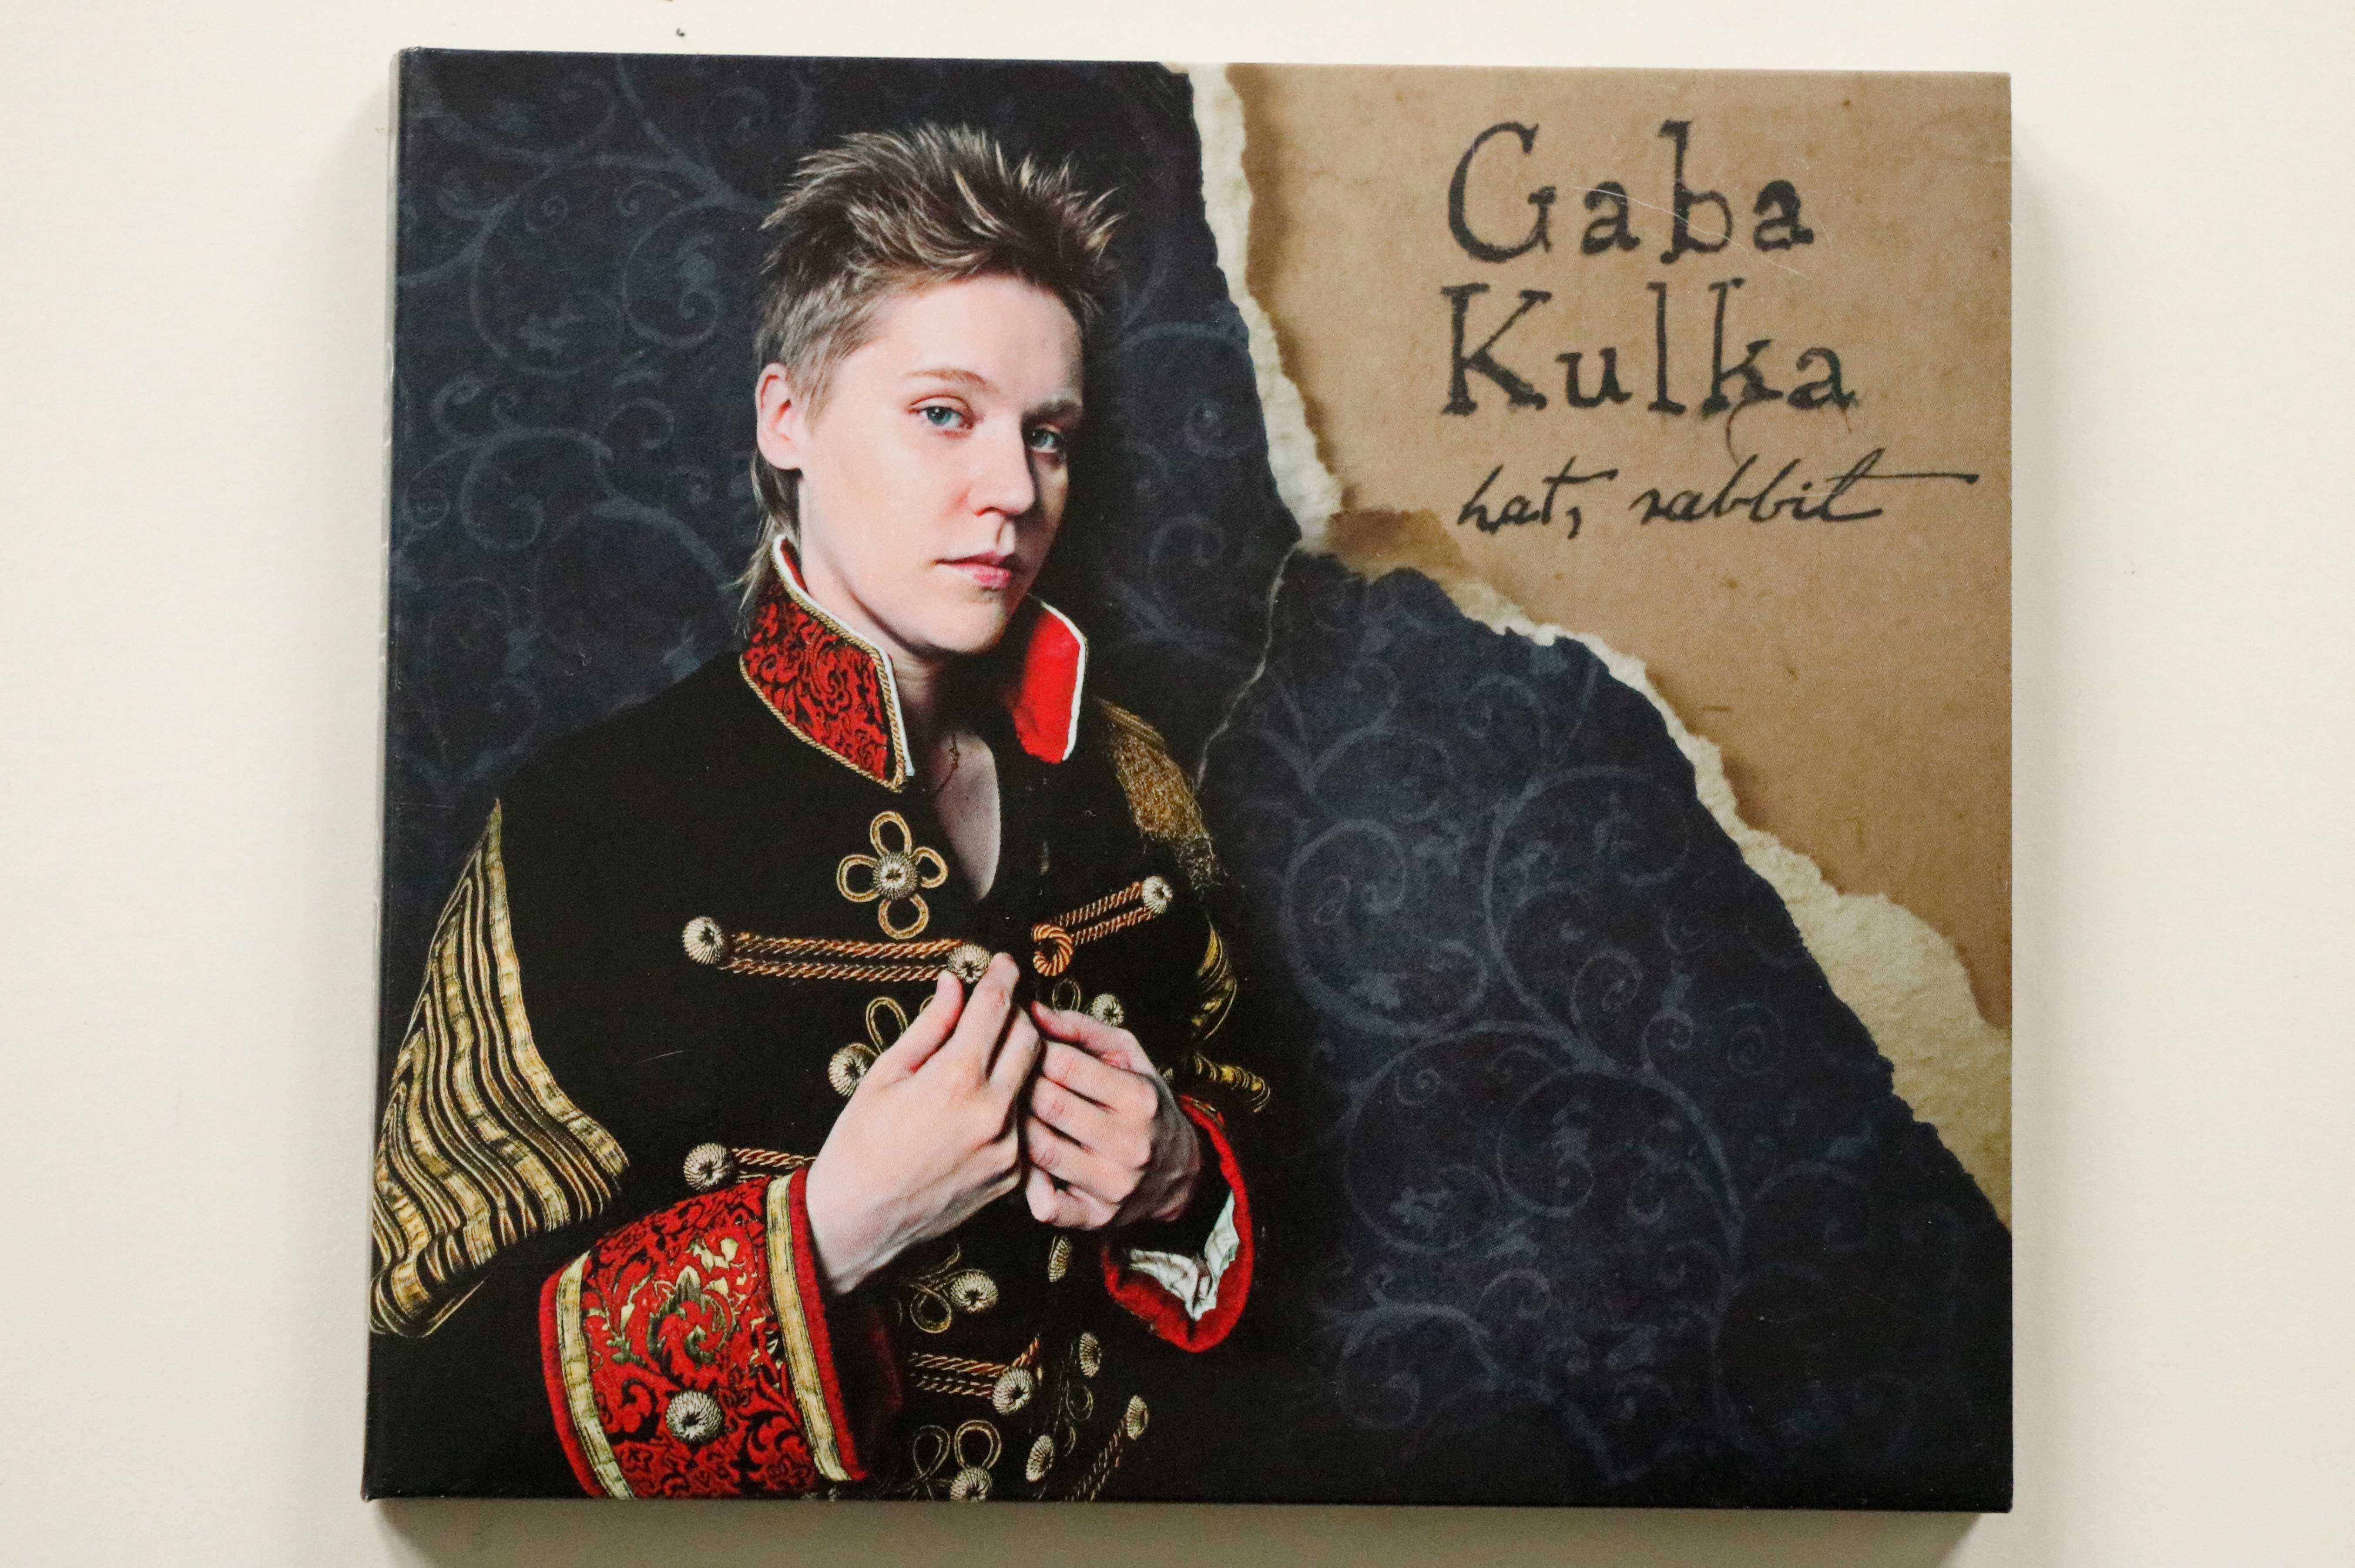 Gaba Kulka - Hat, Rabbit - CD